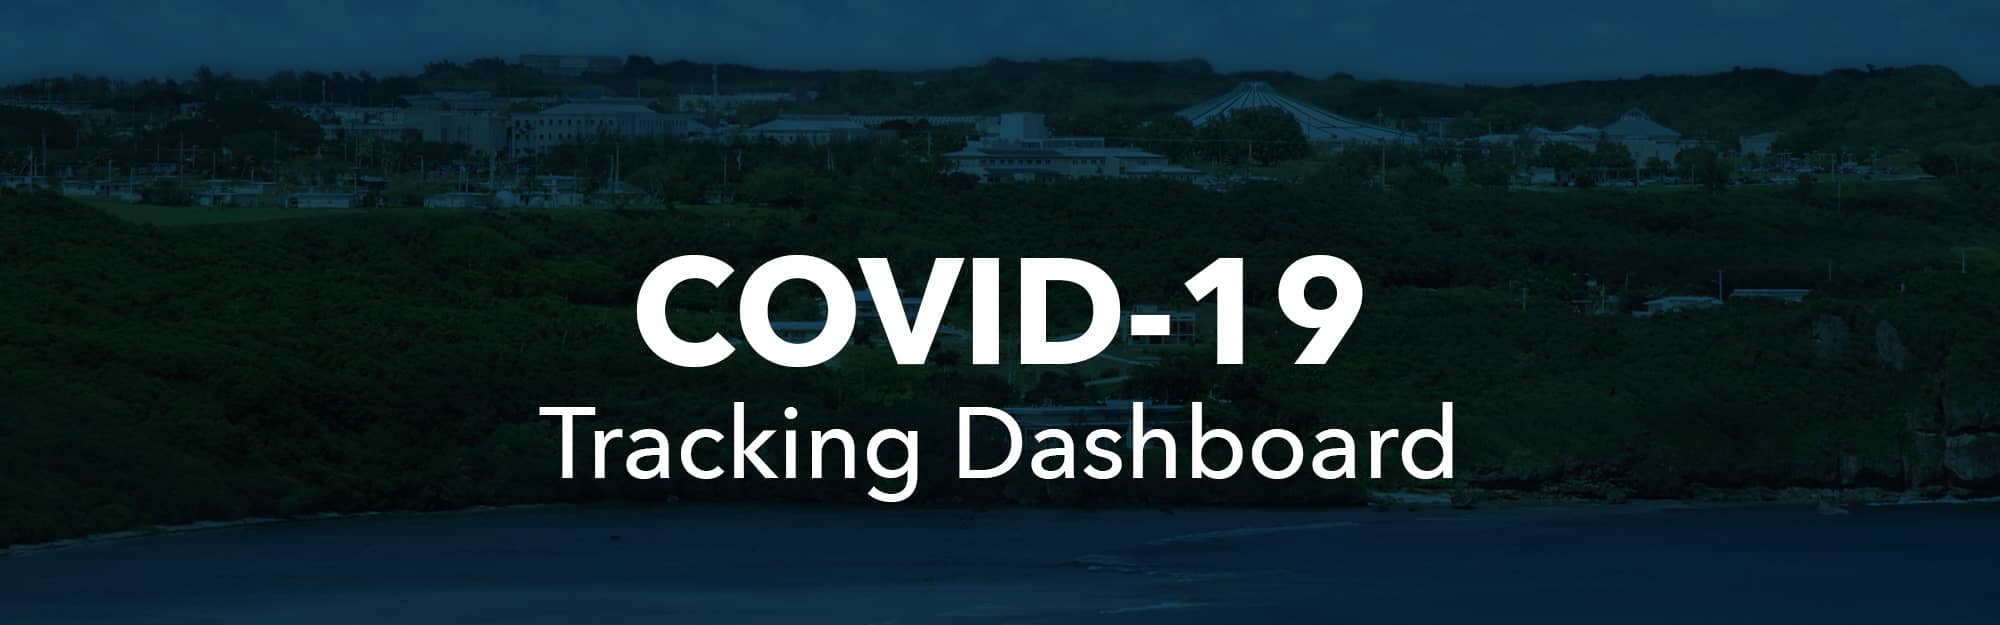 COVID-19 Tracking Dashboard